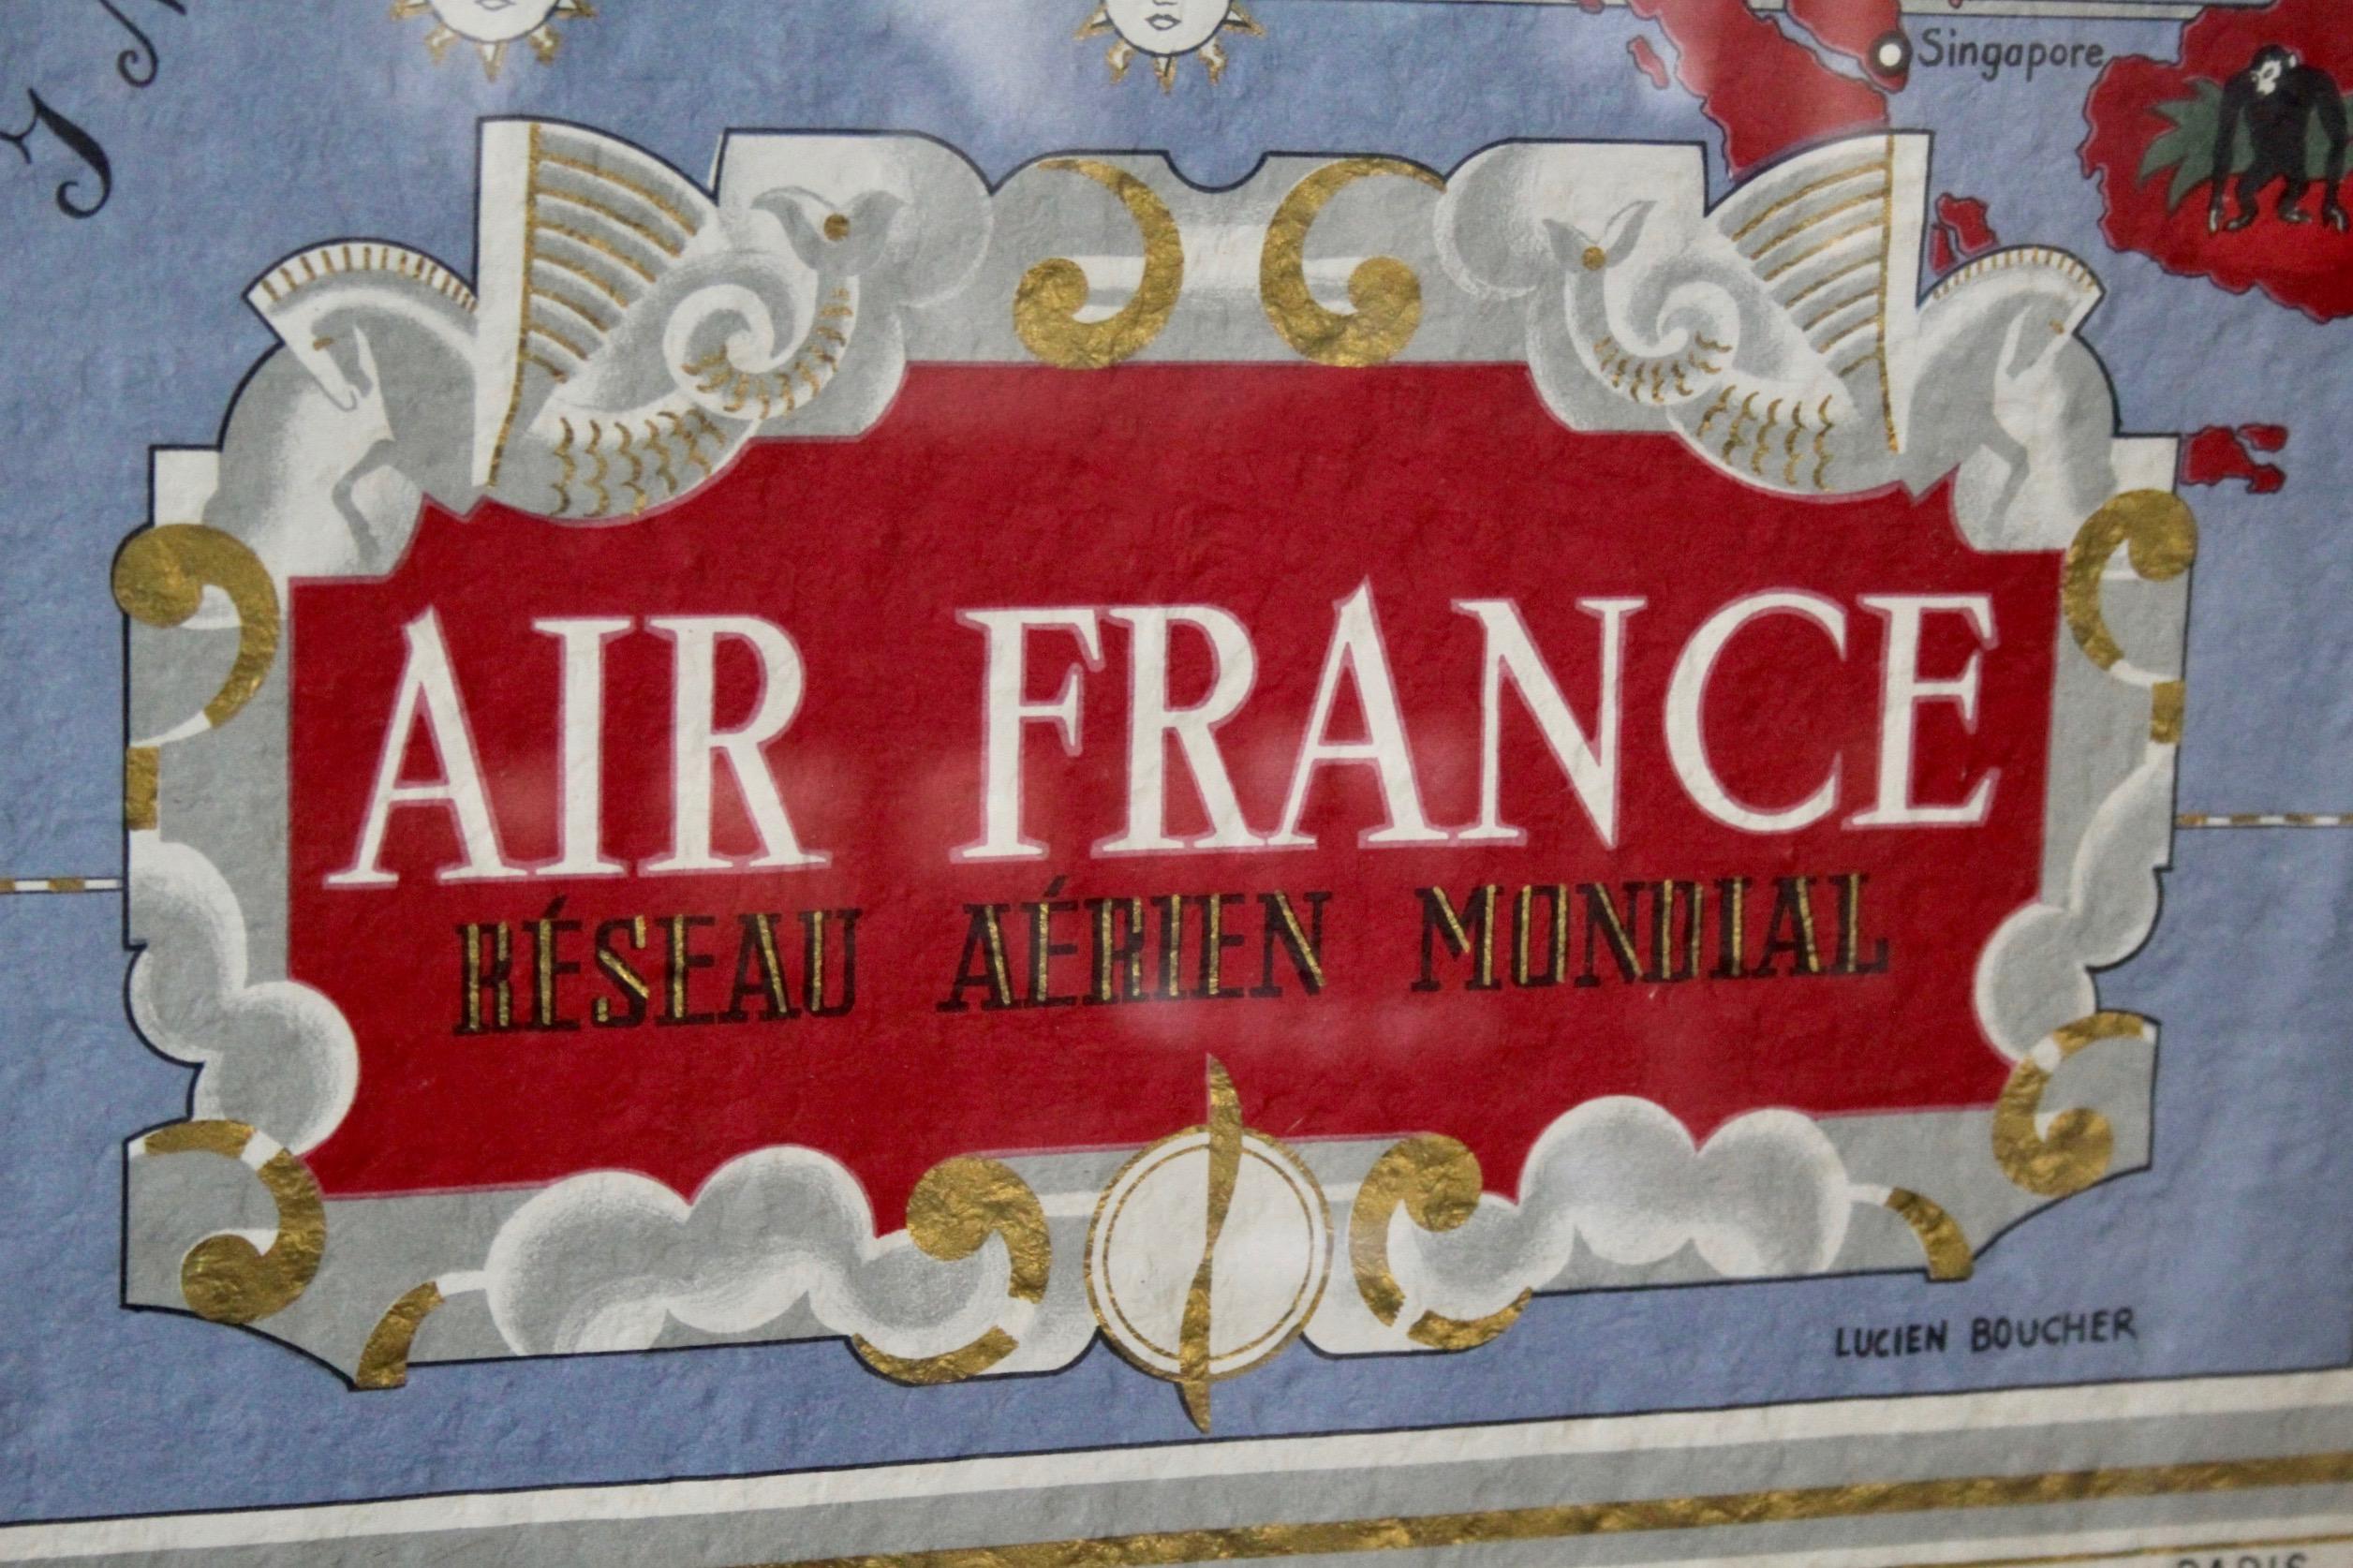 Mid-20th Century Original Vintage Poster Air France Reseau Aerian Mondial Planisphere World Map